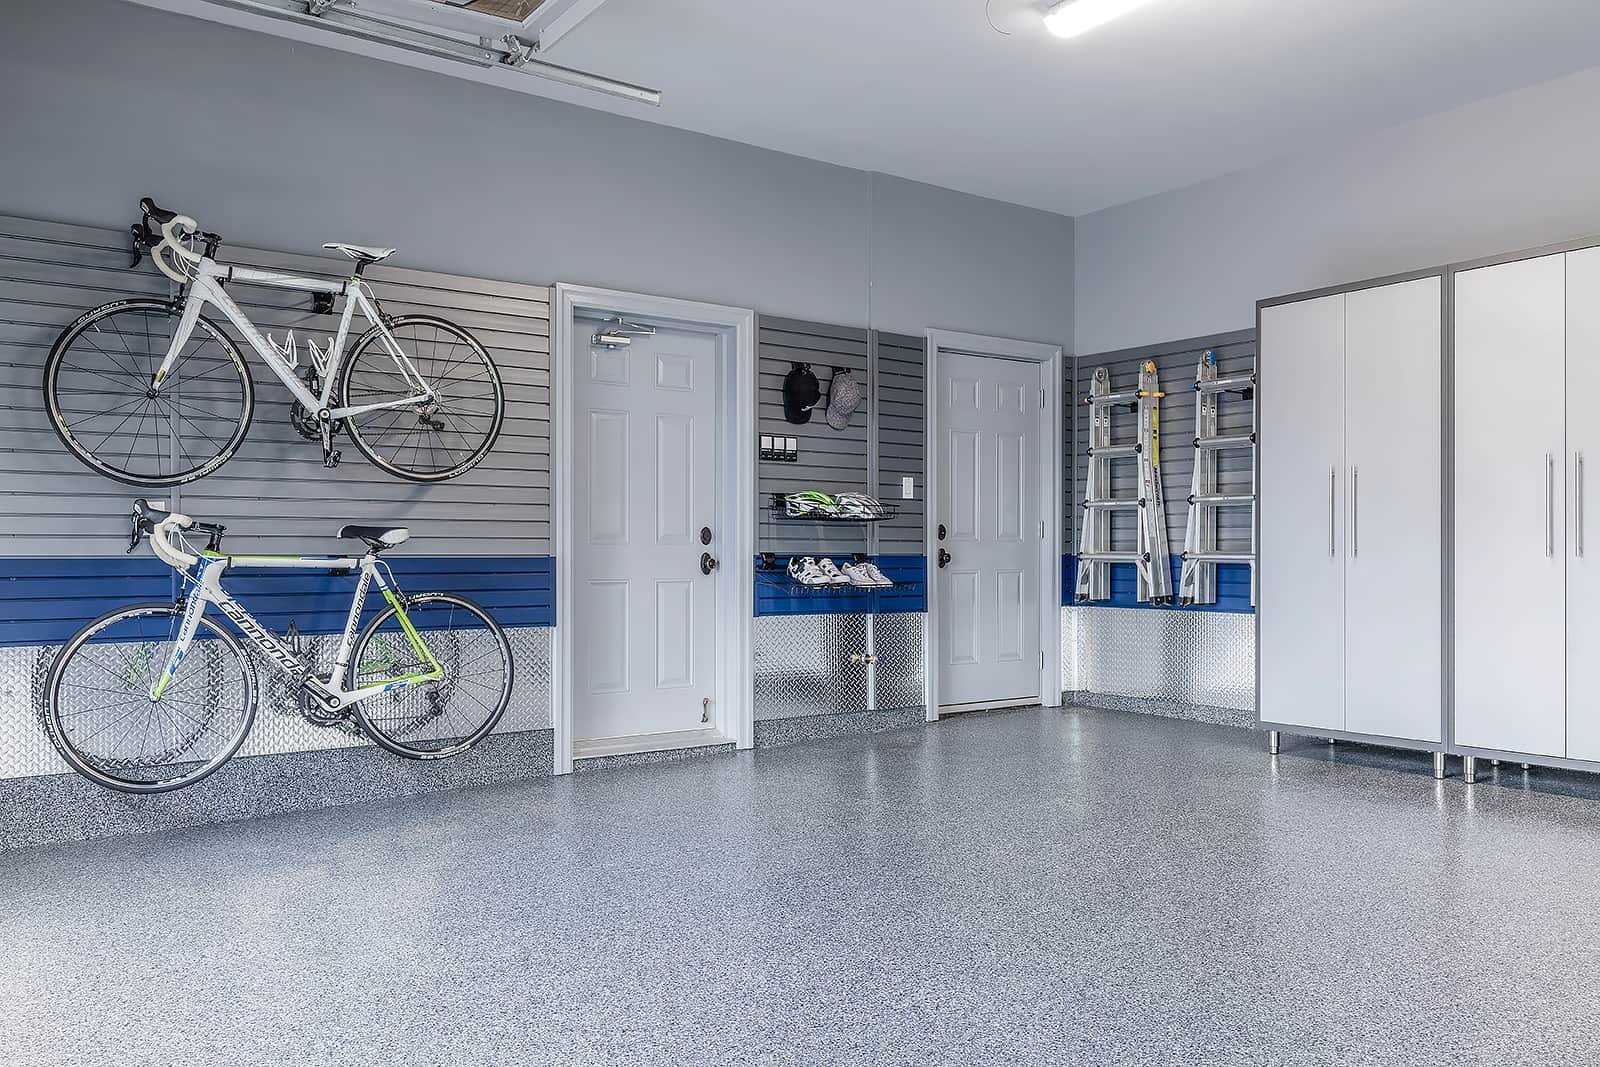 Garage Bike Storage Ideas: 6 Ways To Organize With Ease